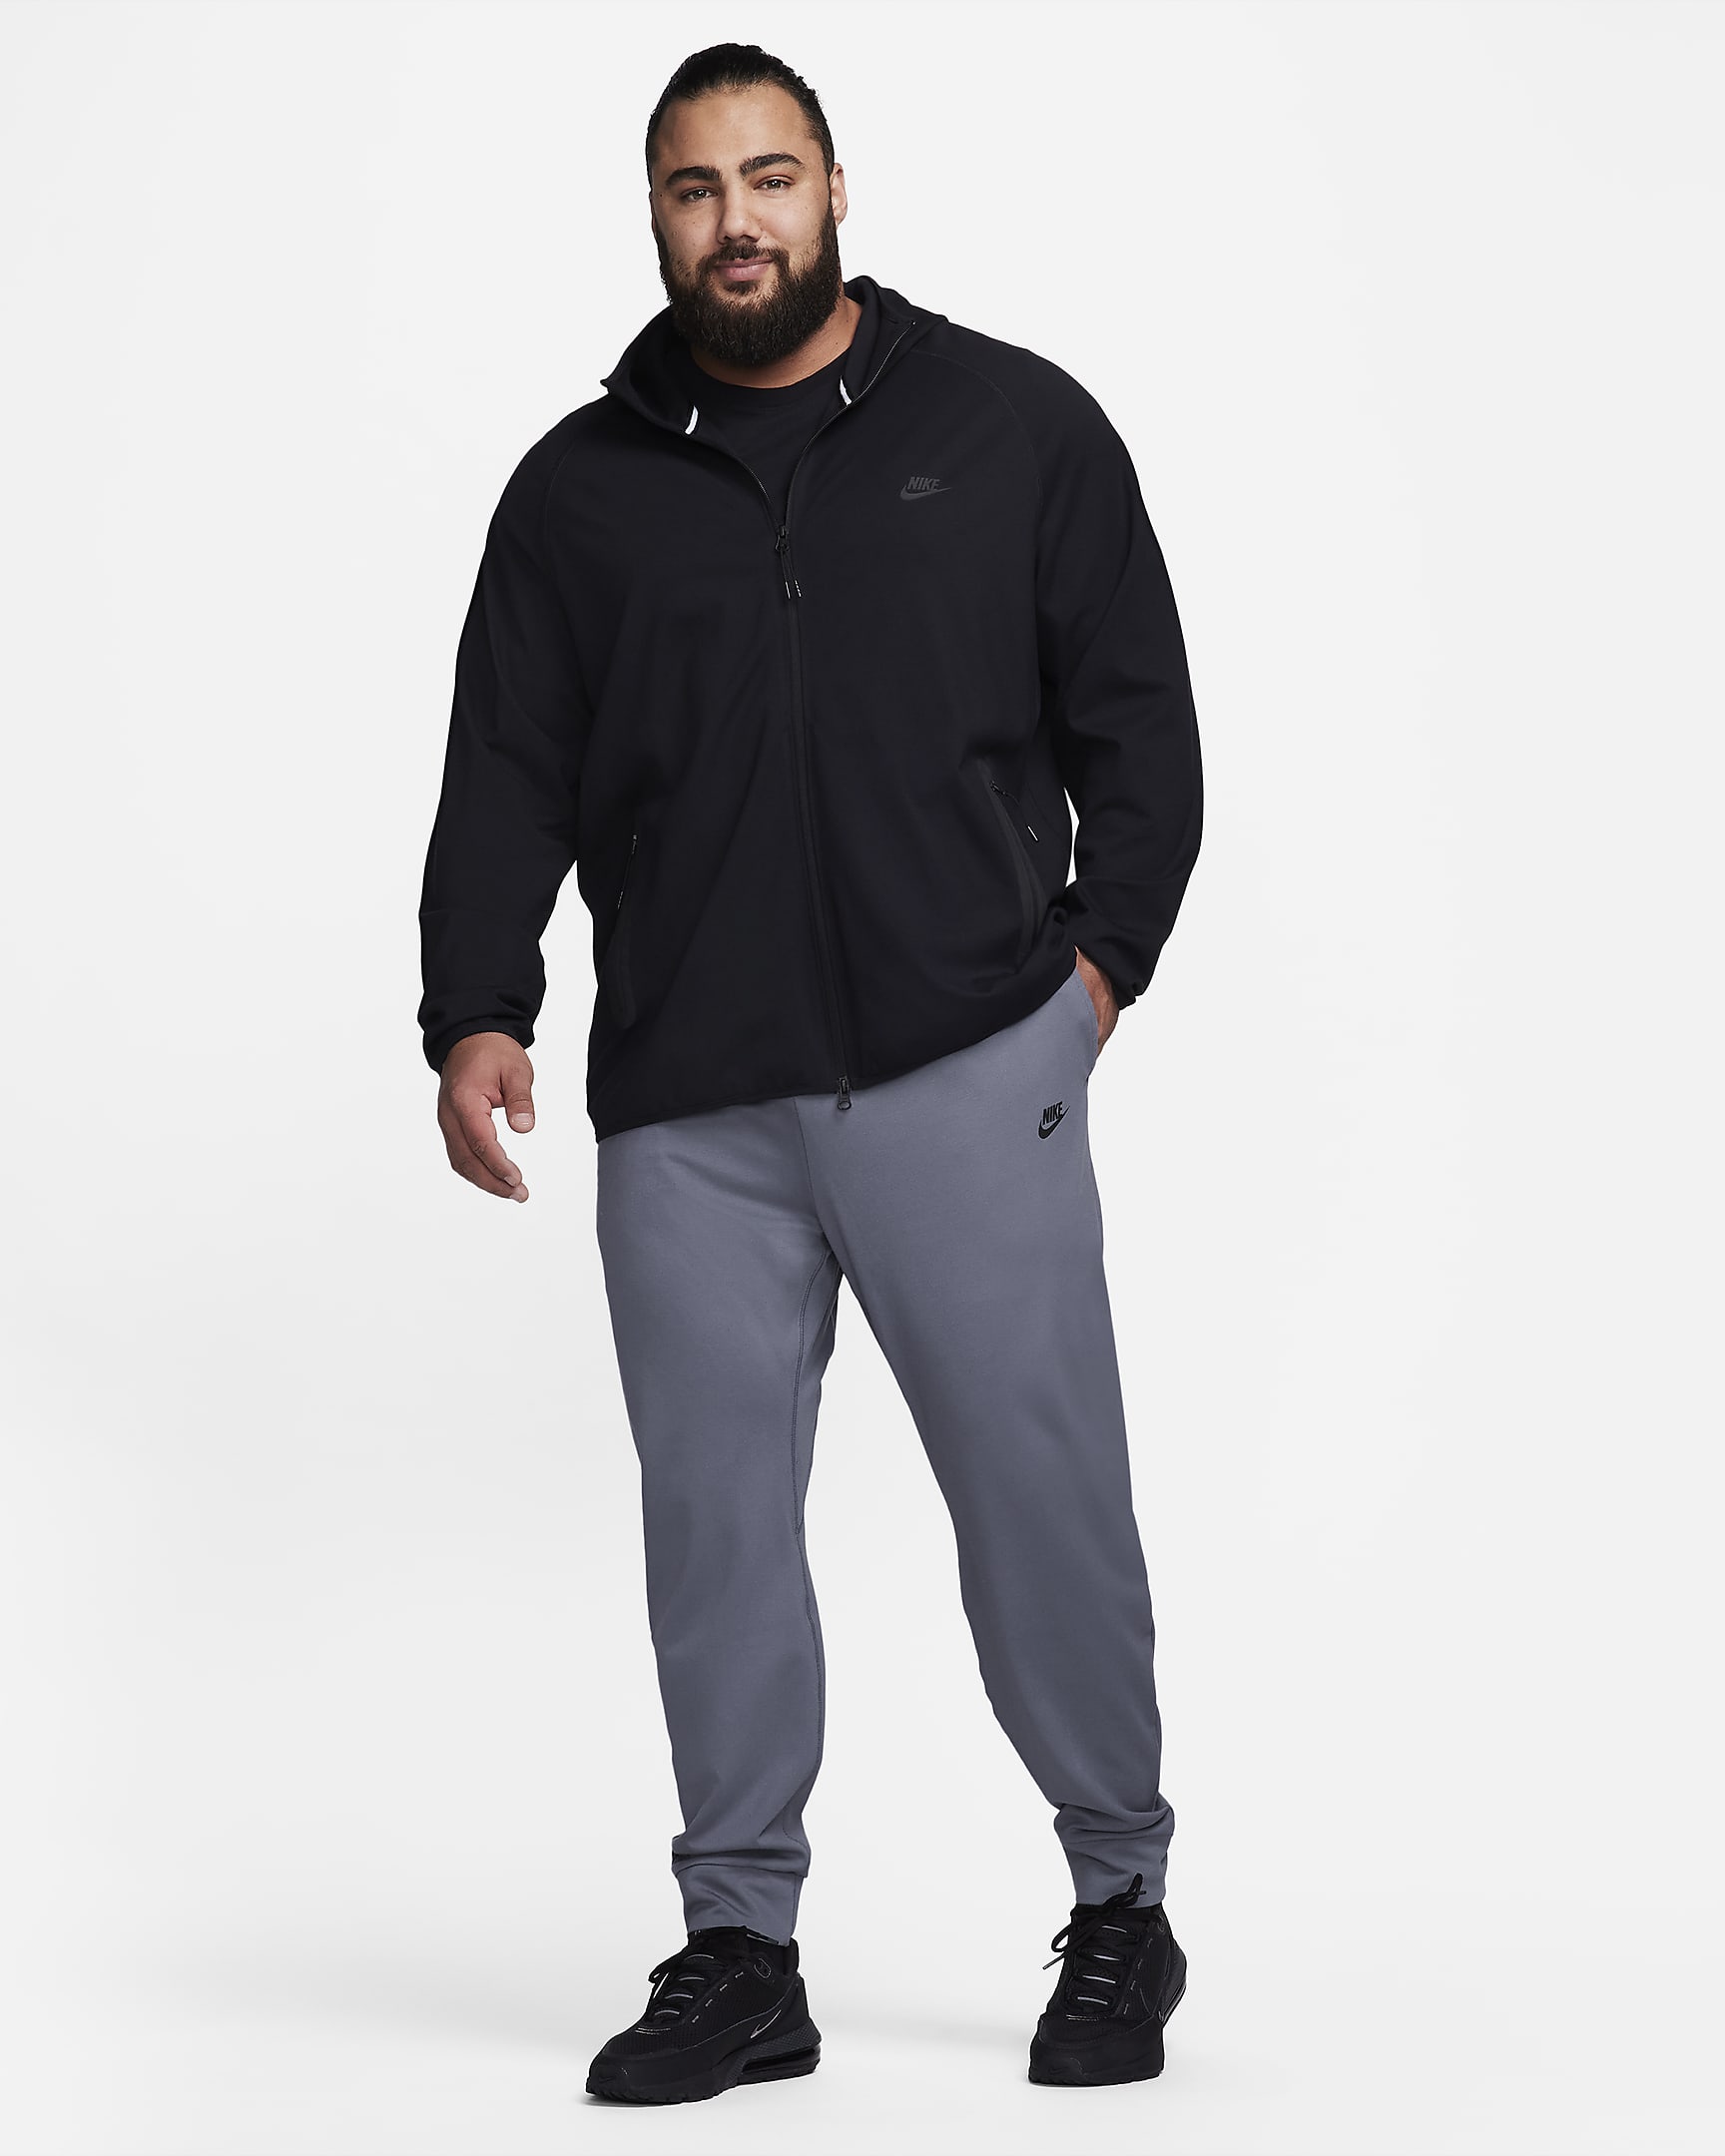 Joggers ligeros de tejido Knit para hombre Nike Sportswear Tech. Nike.com